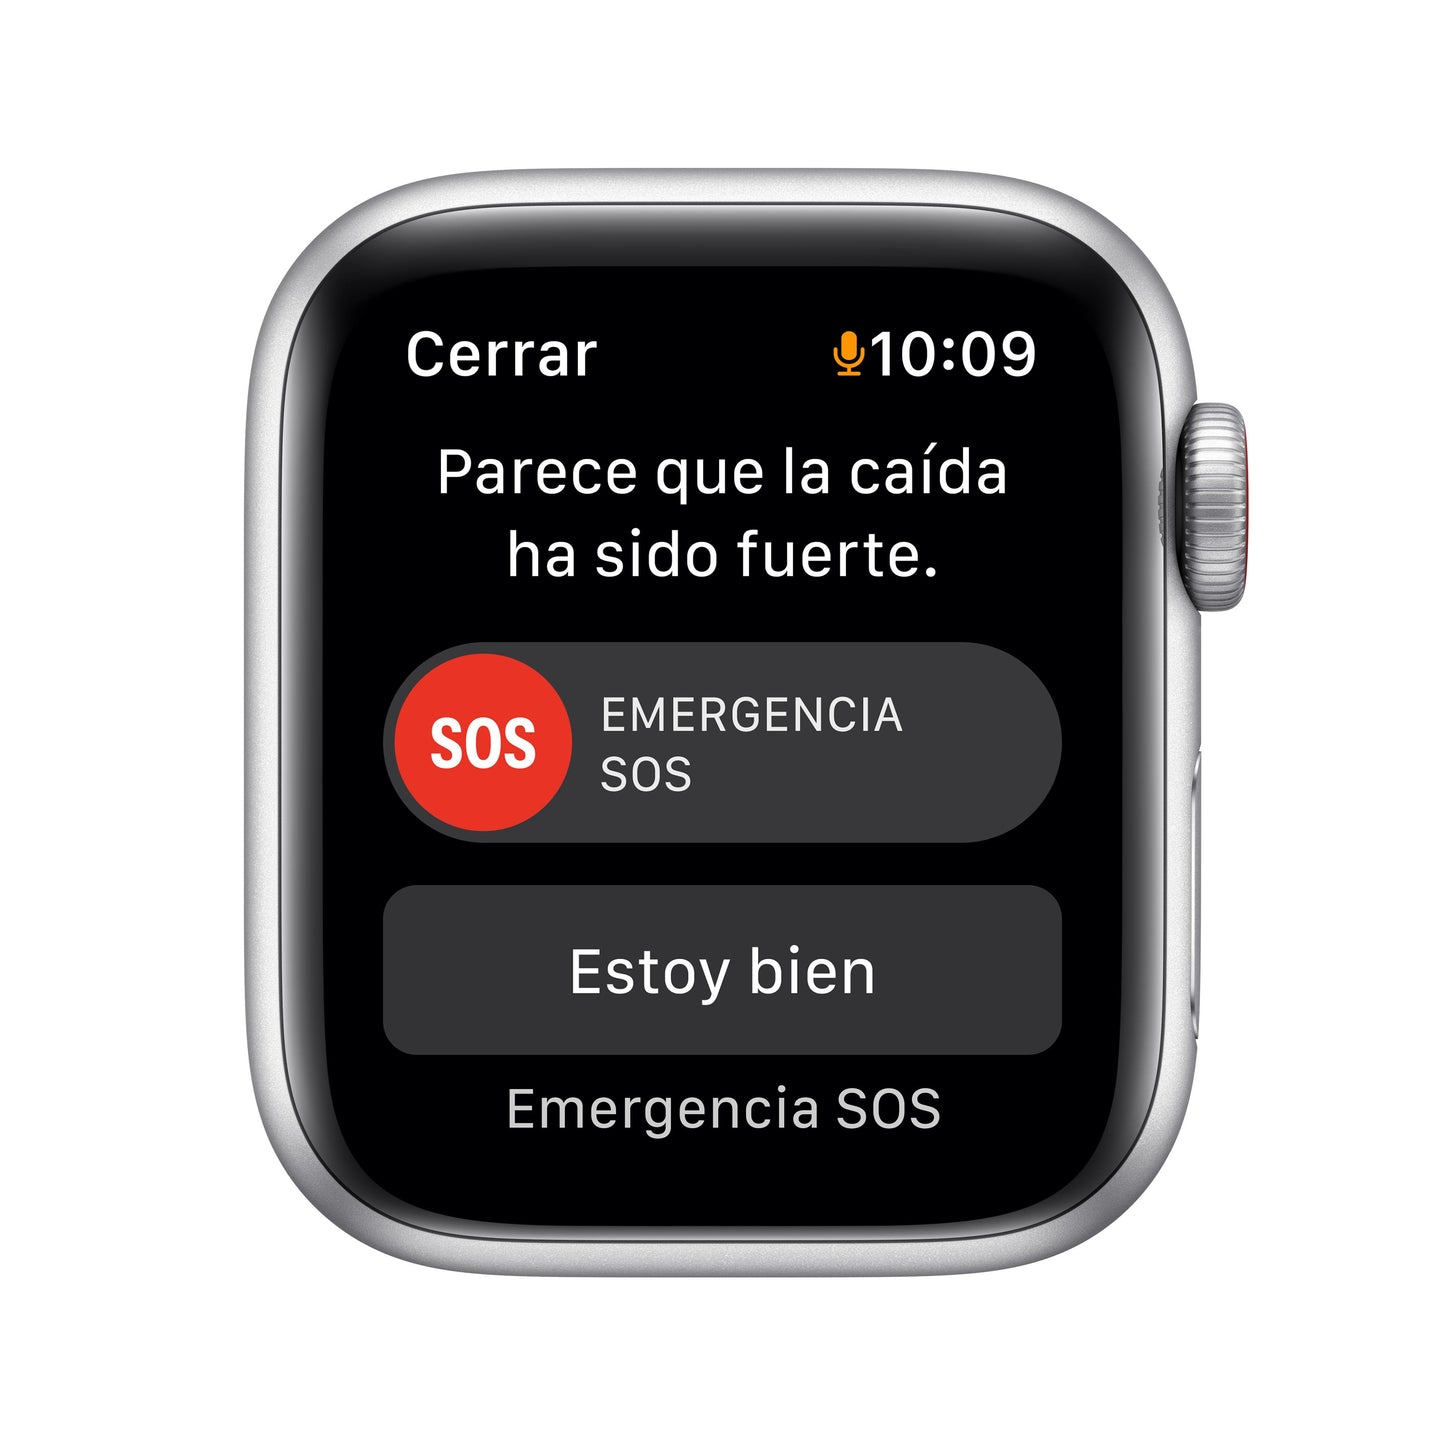 Apple Watch Nike SE (GPS + Cellular) - Caja de aluminio en plata de 40 mm - Correa Nike Sport platino puro/negra - Talla única